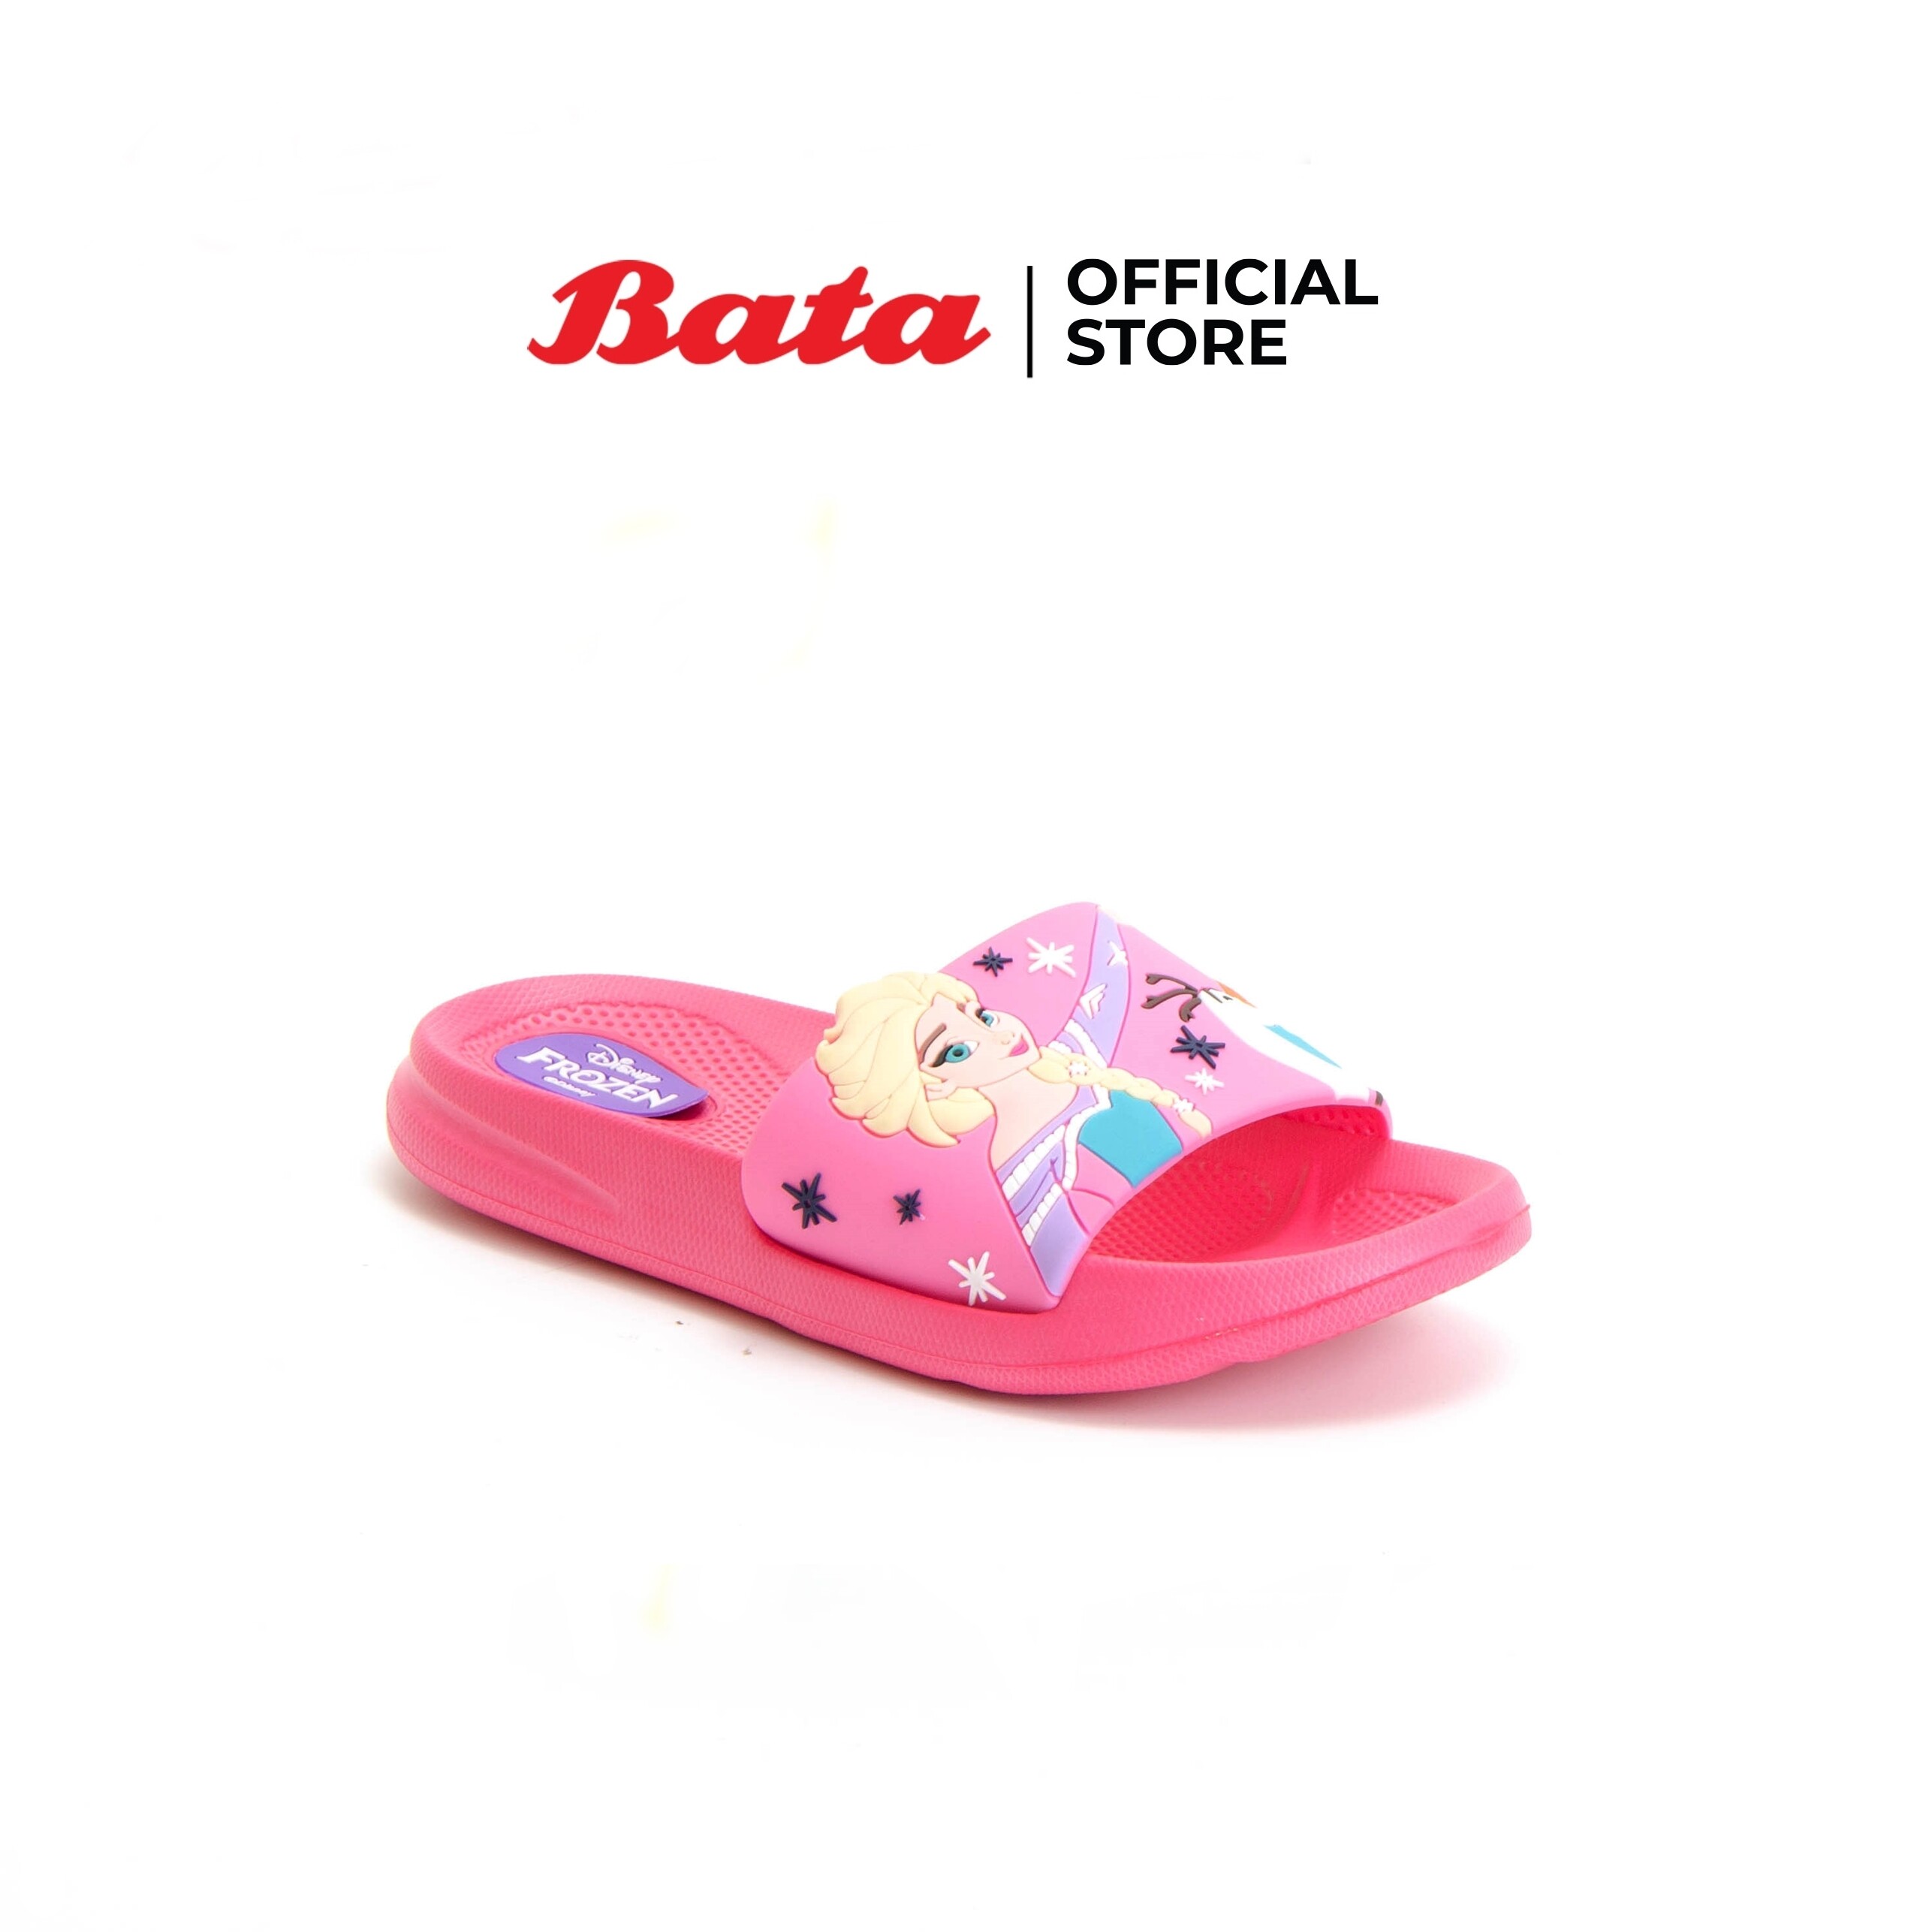 *Best Seller* BATA BBG SUMMER รองเท้าแตะเด็กหญิง ลาย FROZEN แบบสวม เปิดส้น สีชมพู รหัส 1615520 (เด็กหัดเดิน) /3615520 (เด็ก) สี สีชมพู ไซส์ EU 32 สี สีชมพูไซส์ EU 32